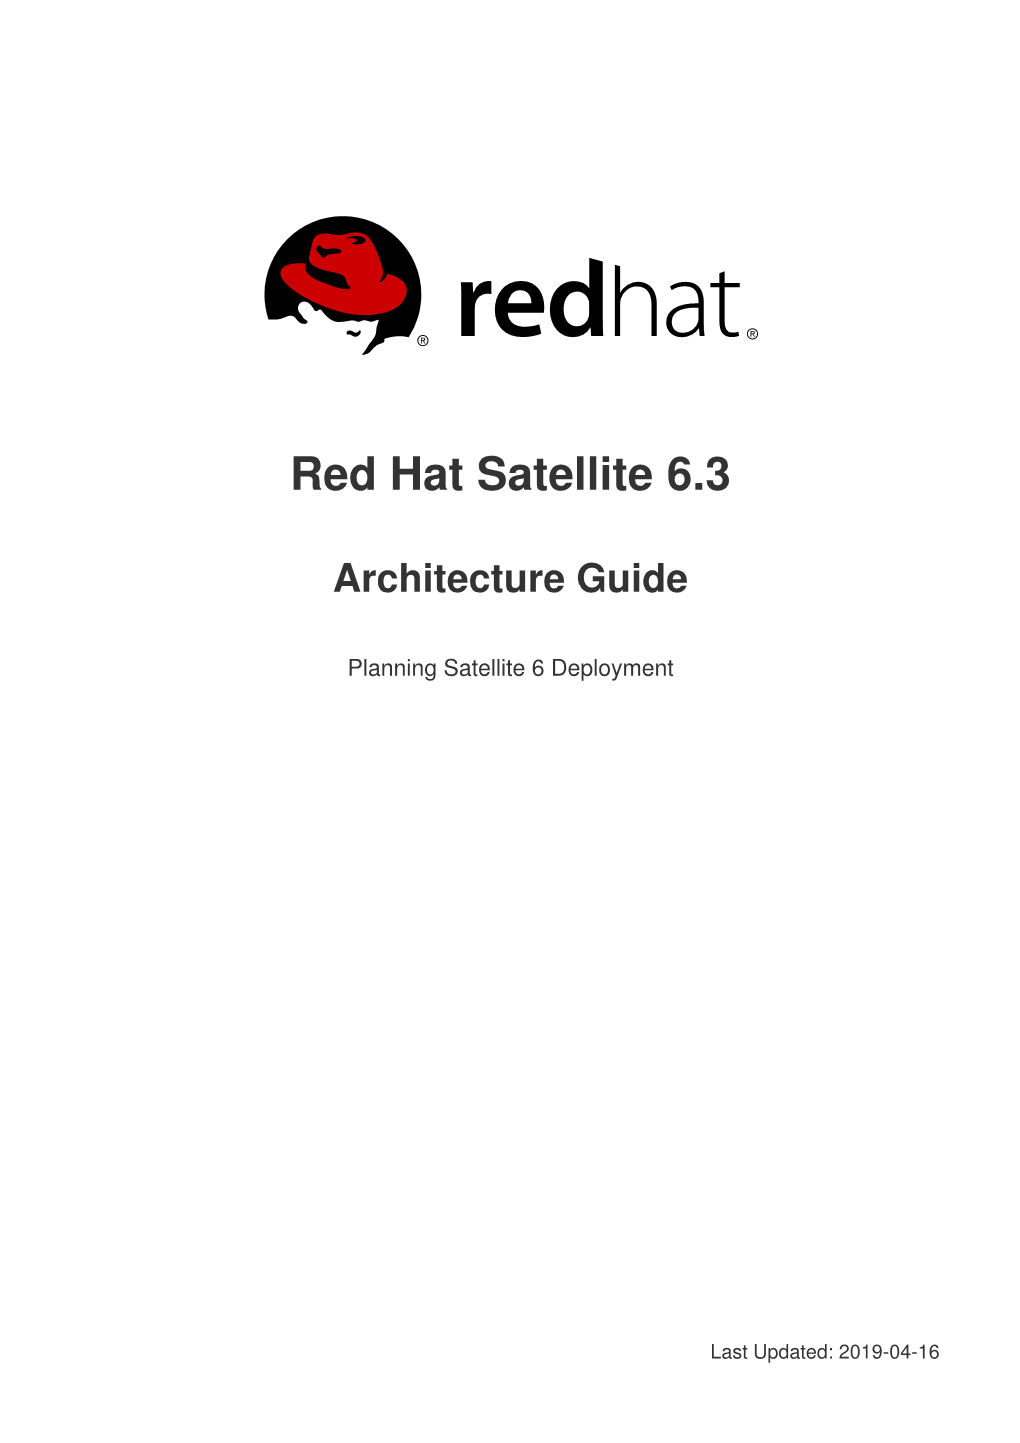 Red Hat Satellite 6.3 Architecture Guide